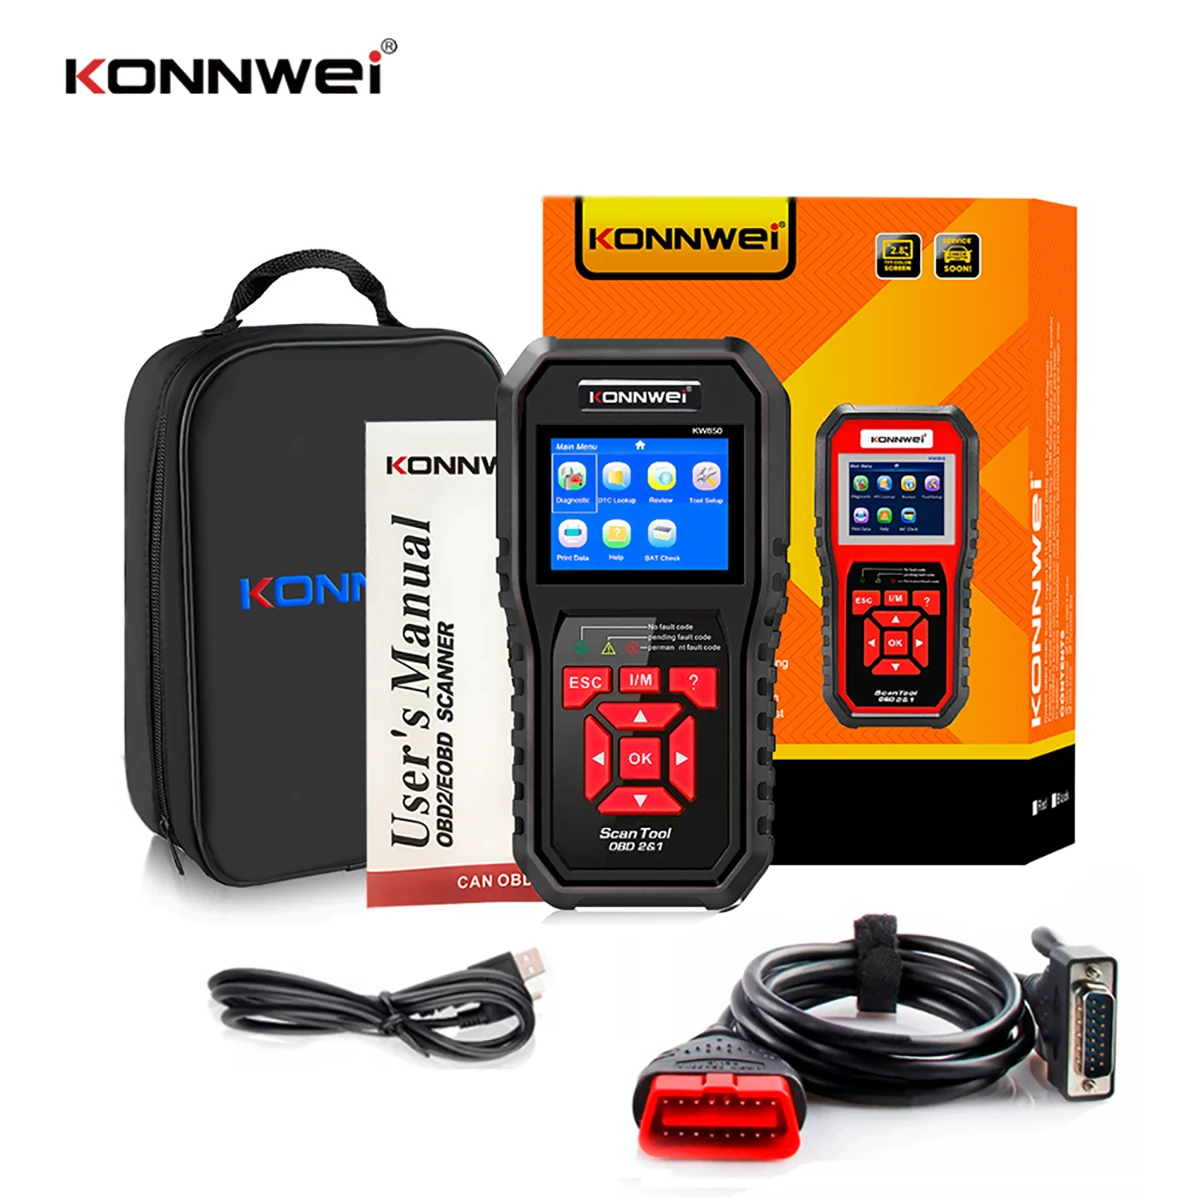 

KONNWEI KW850 Car OBD2 Auto Diagnostic Fault Code Reader Scanner Check Engine Light O2 Sensor Views Freeze Frame Data Test Tools